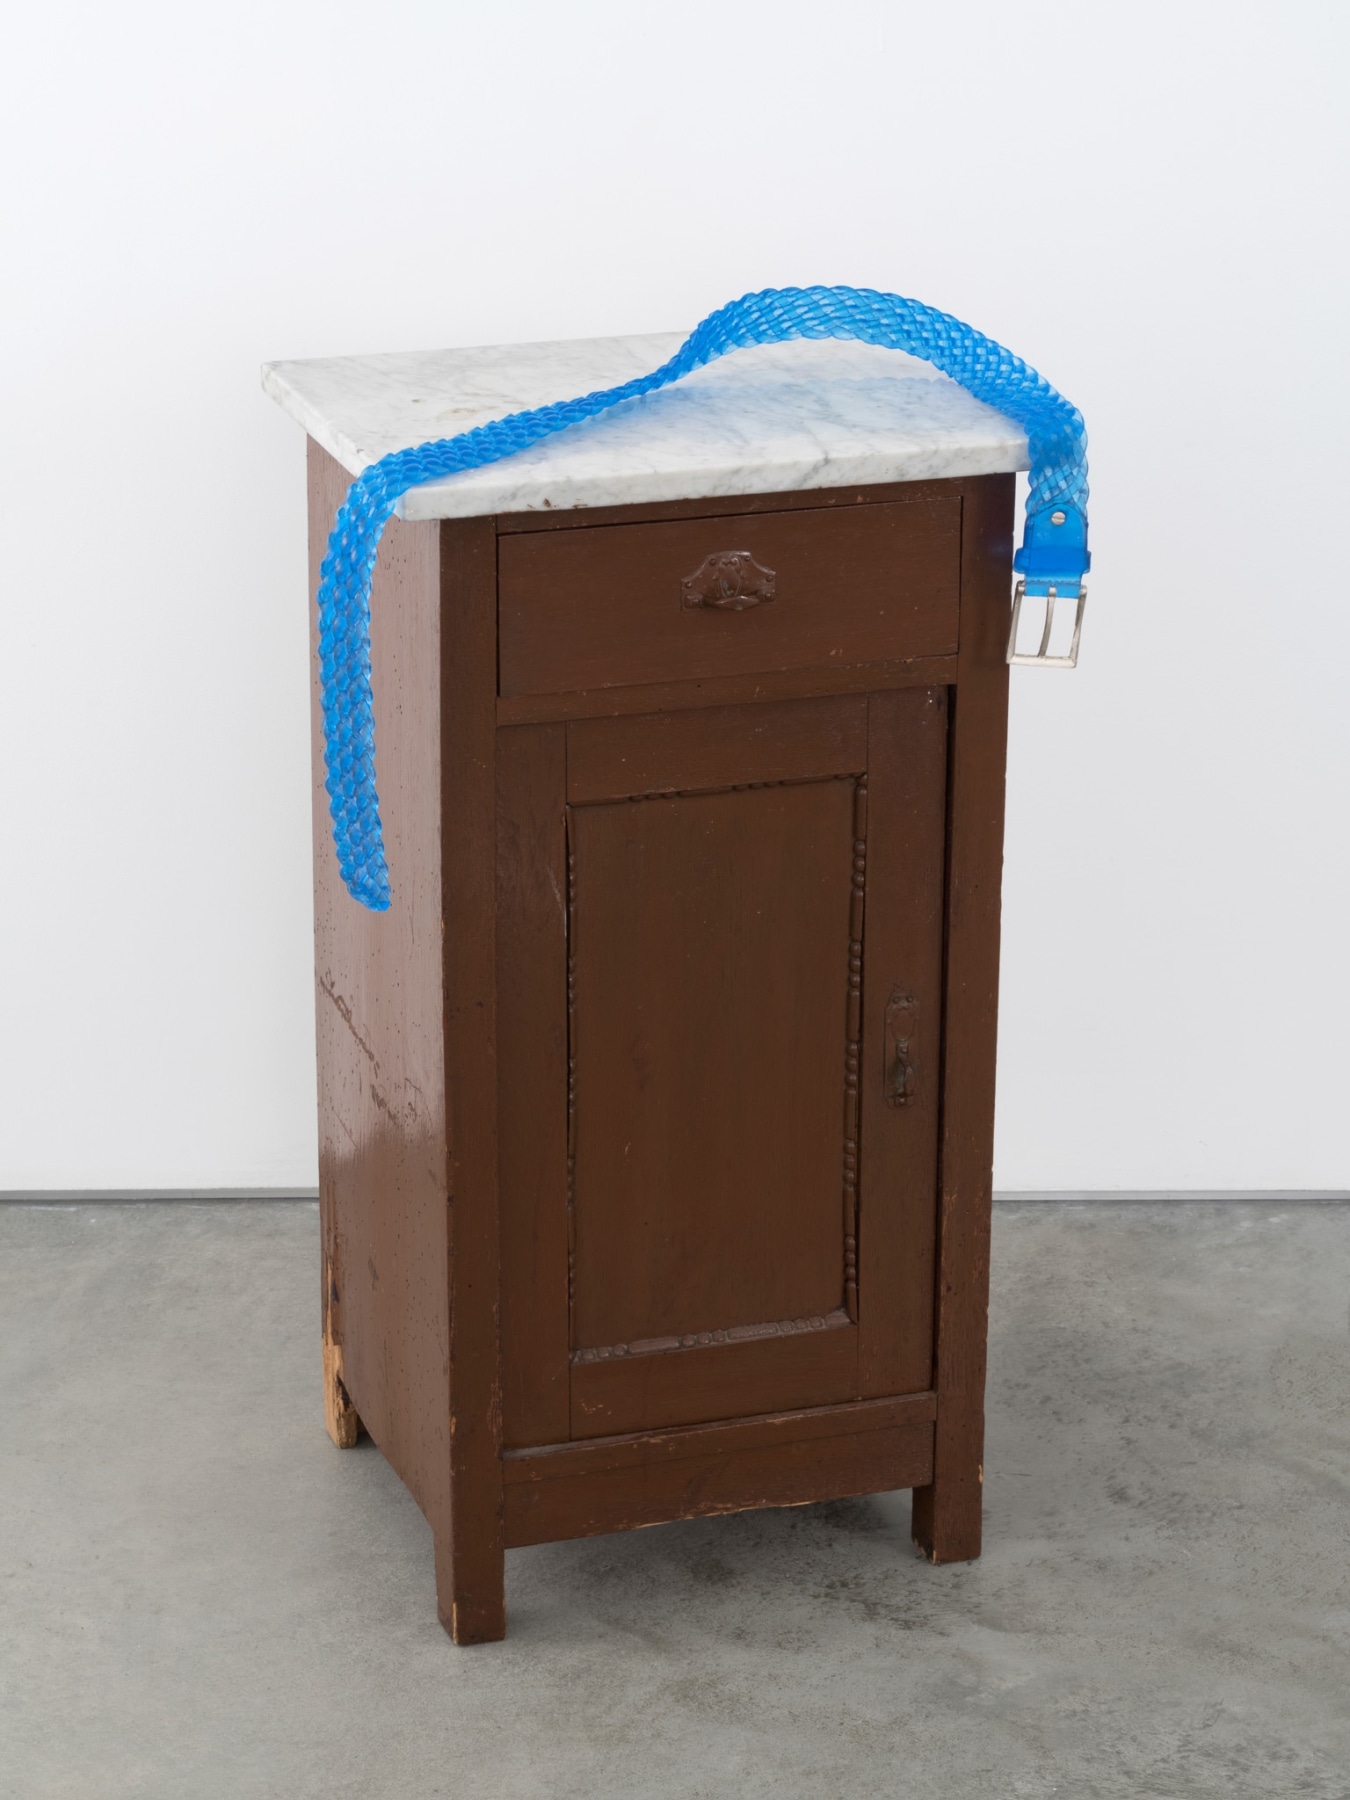 ￼￼Valentin Carron, Belt on small cabinet, 2014